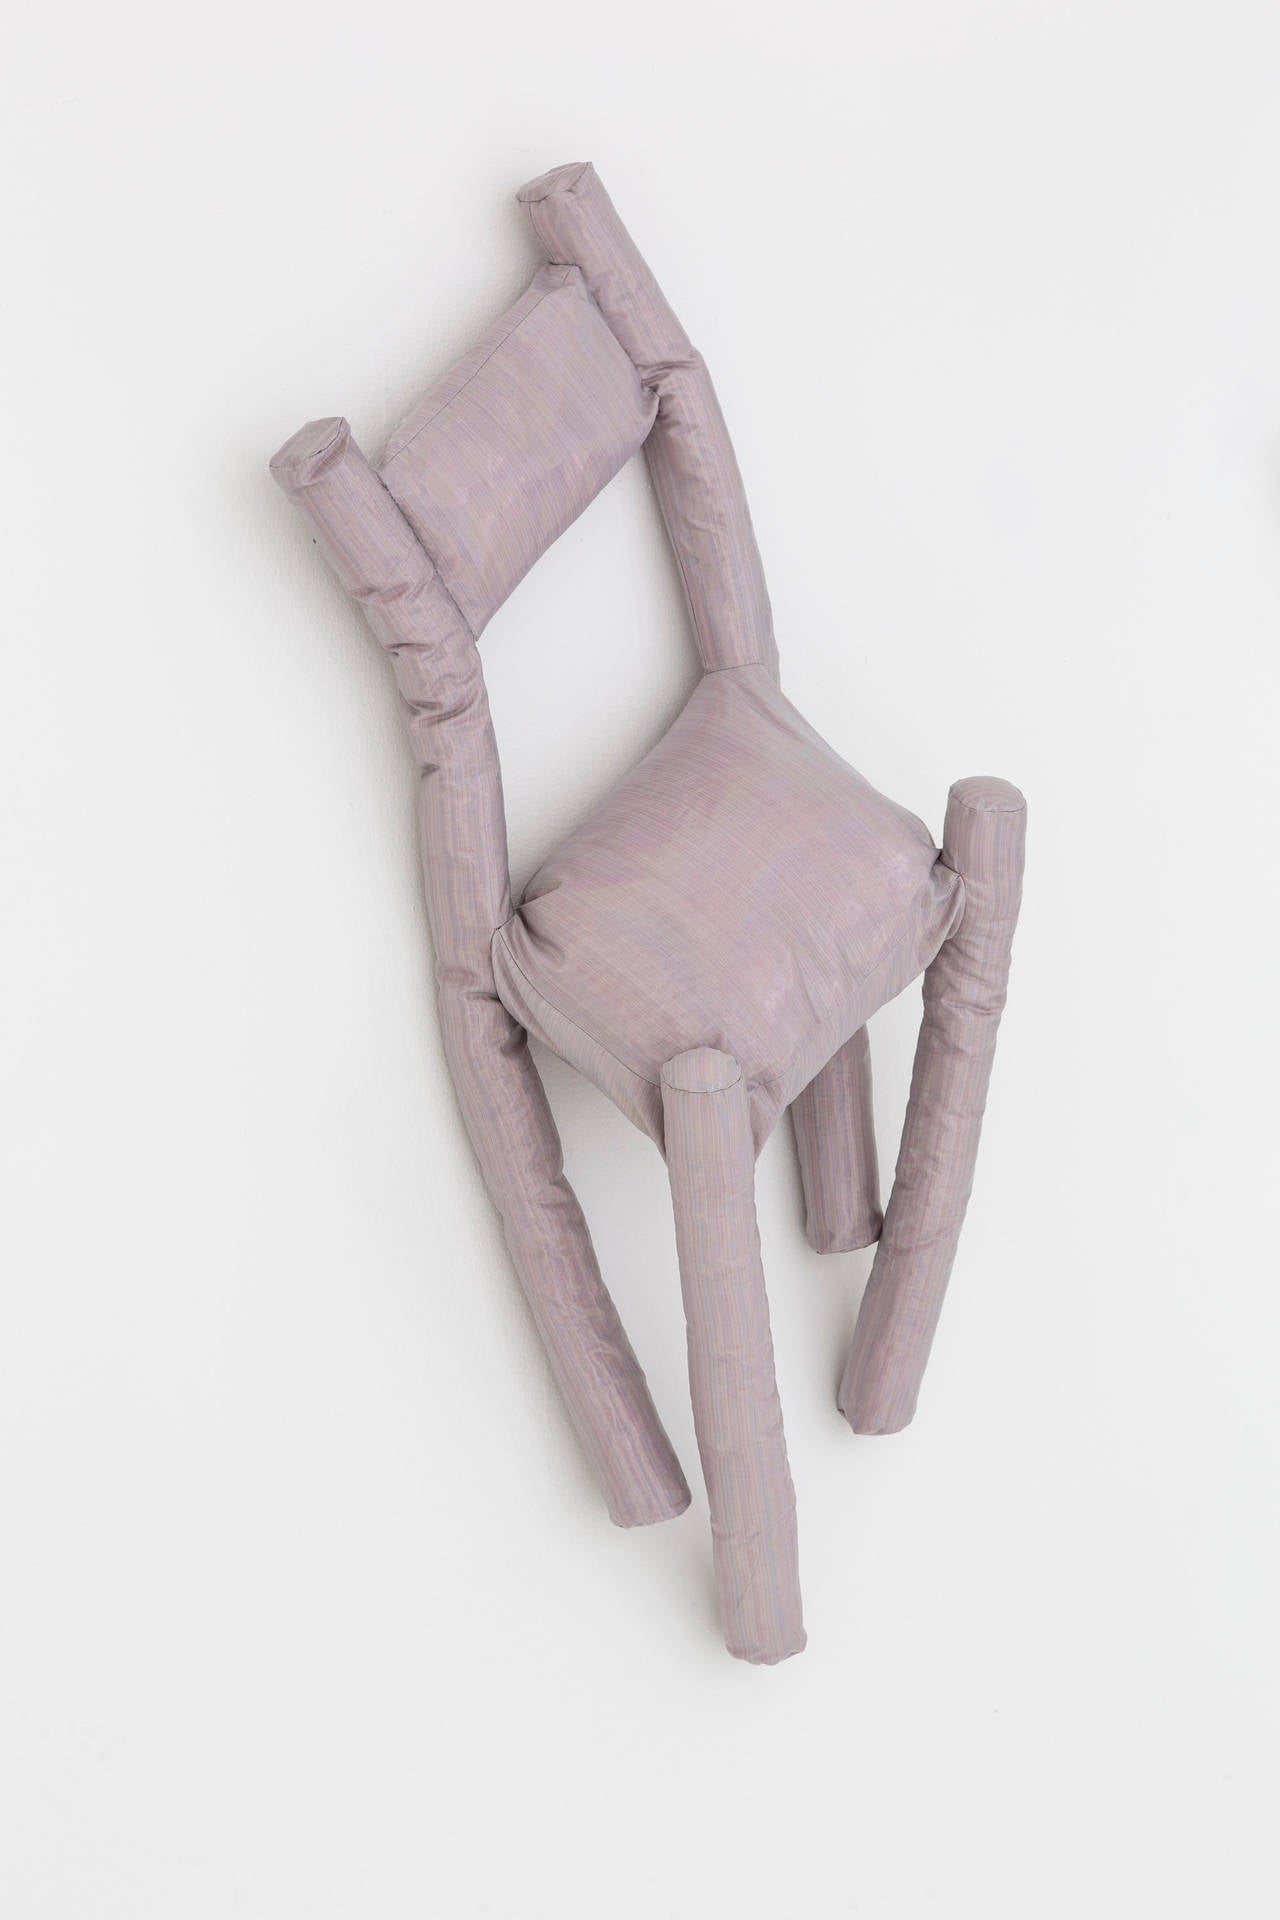 Sad Chair 2 - Contemporary Sculpture by Katie Stout